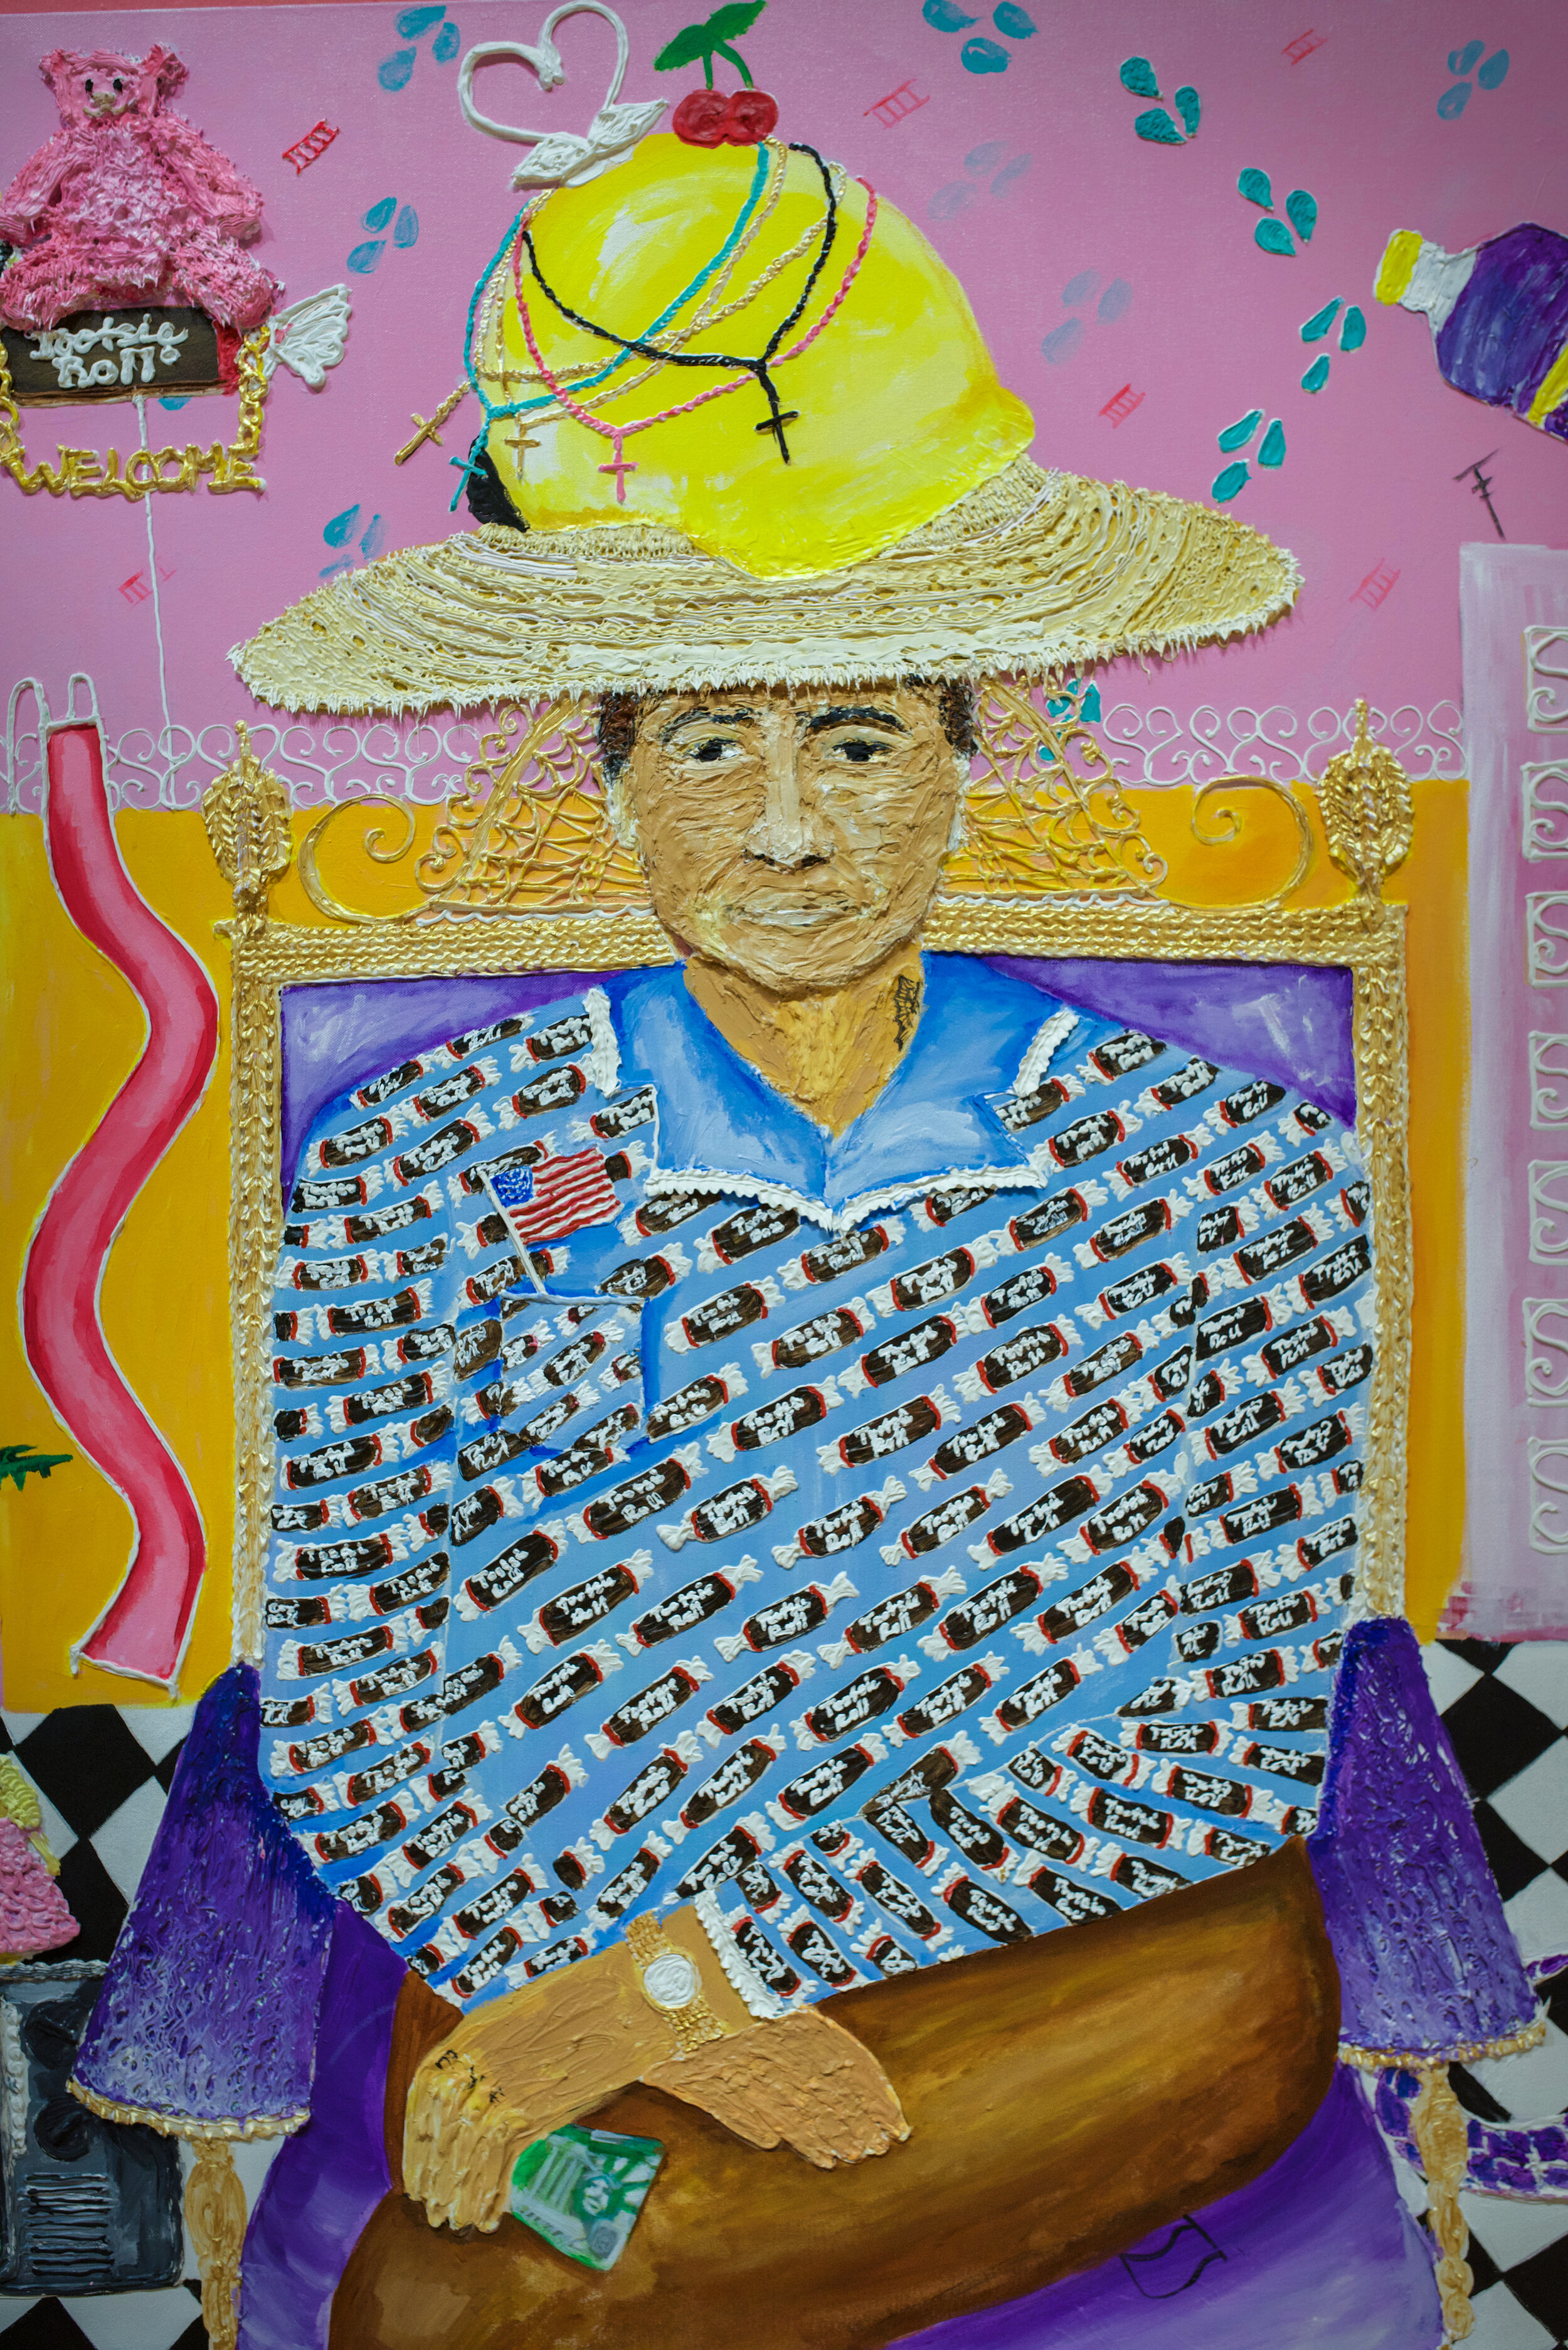  Detail view of work by Yvette Mayorga – photo by Gloria Arroyo. 